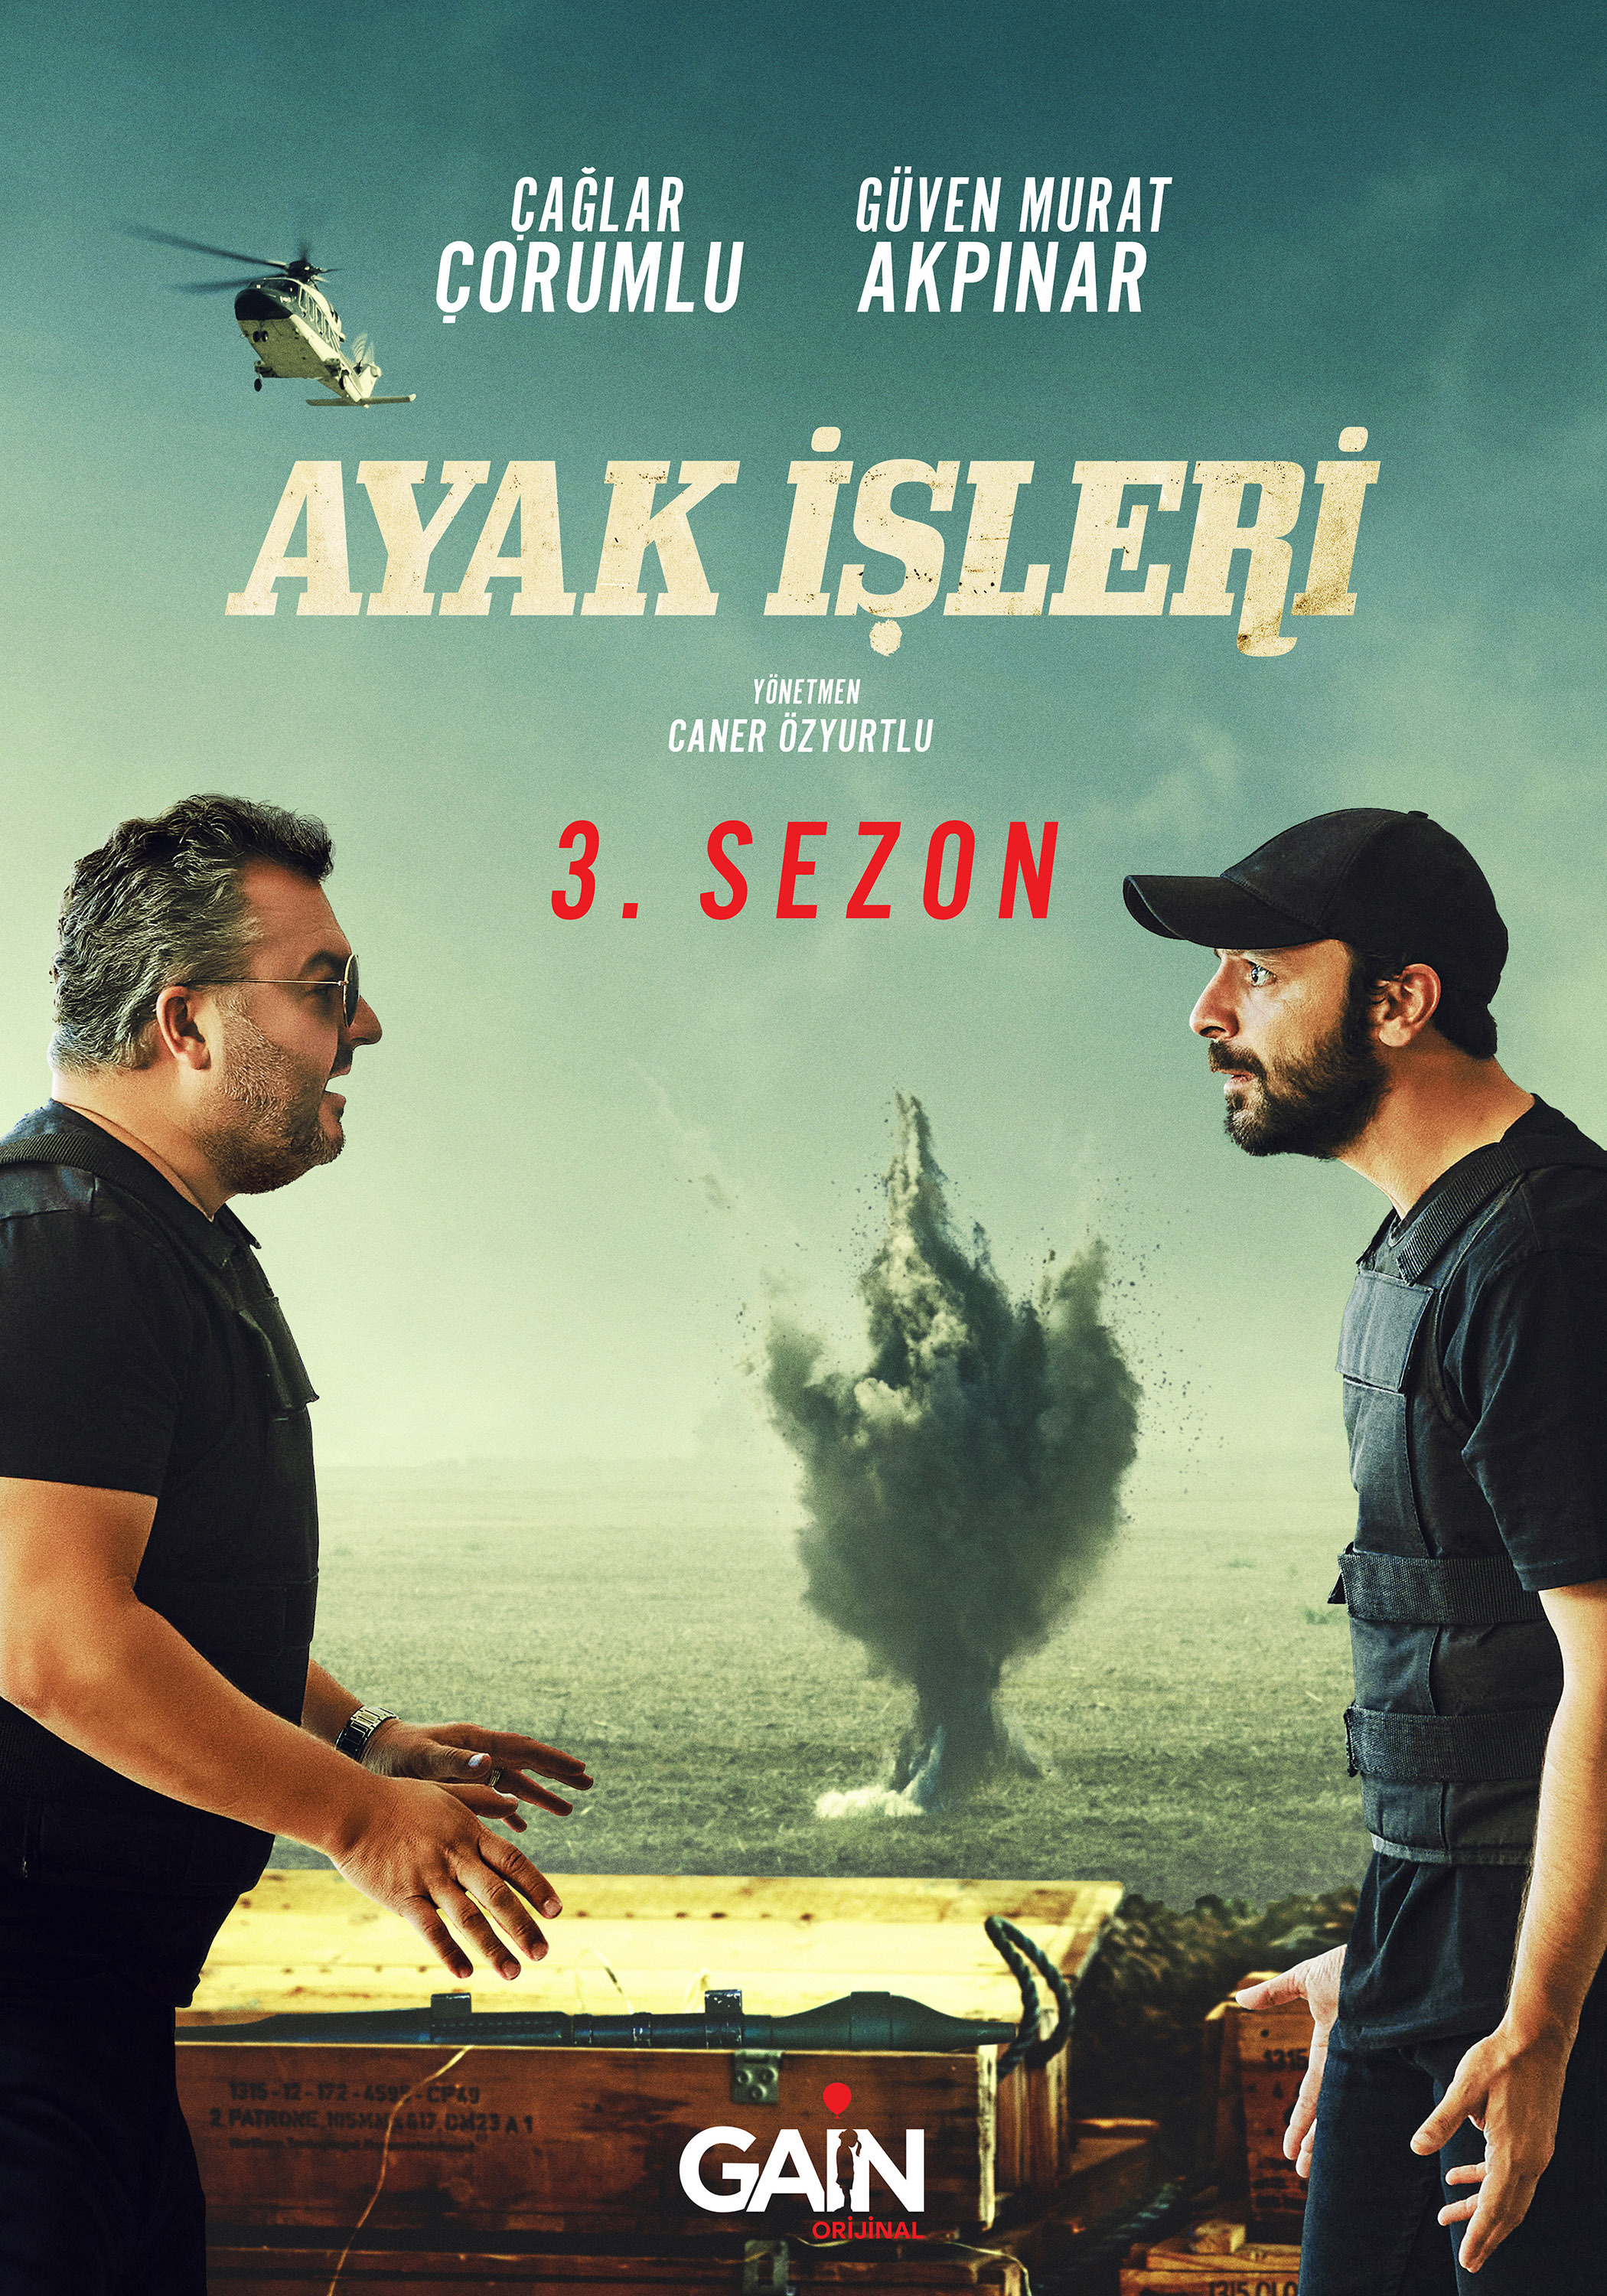 Mega Sized TV Poster Image for Ayak Isleri (#7 of 8)